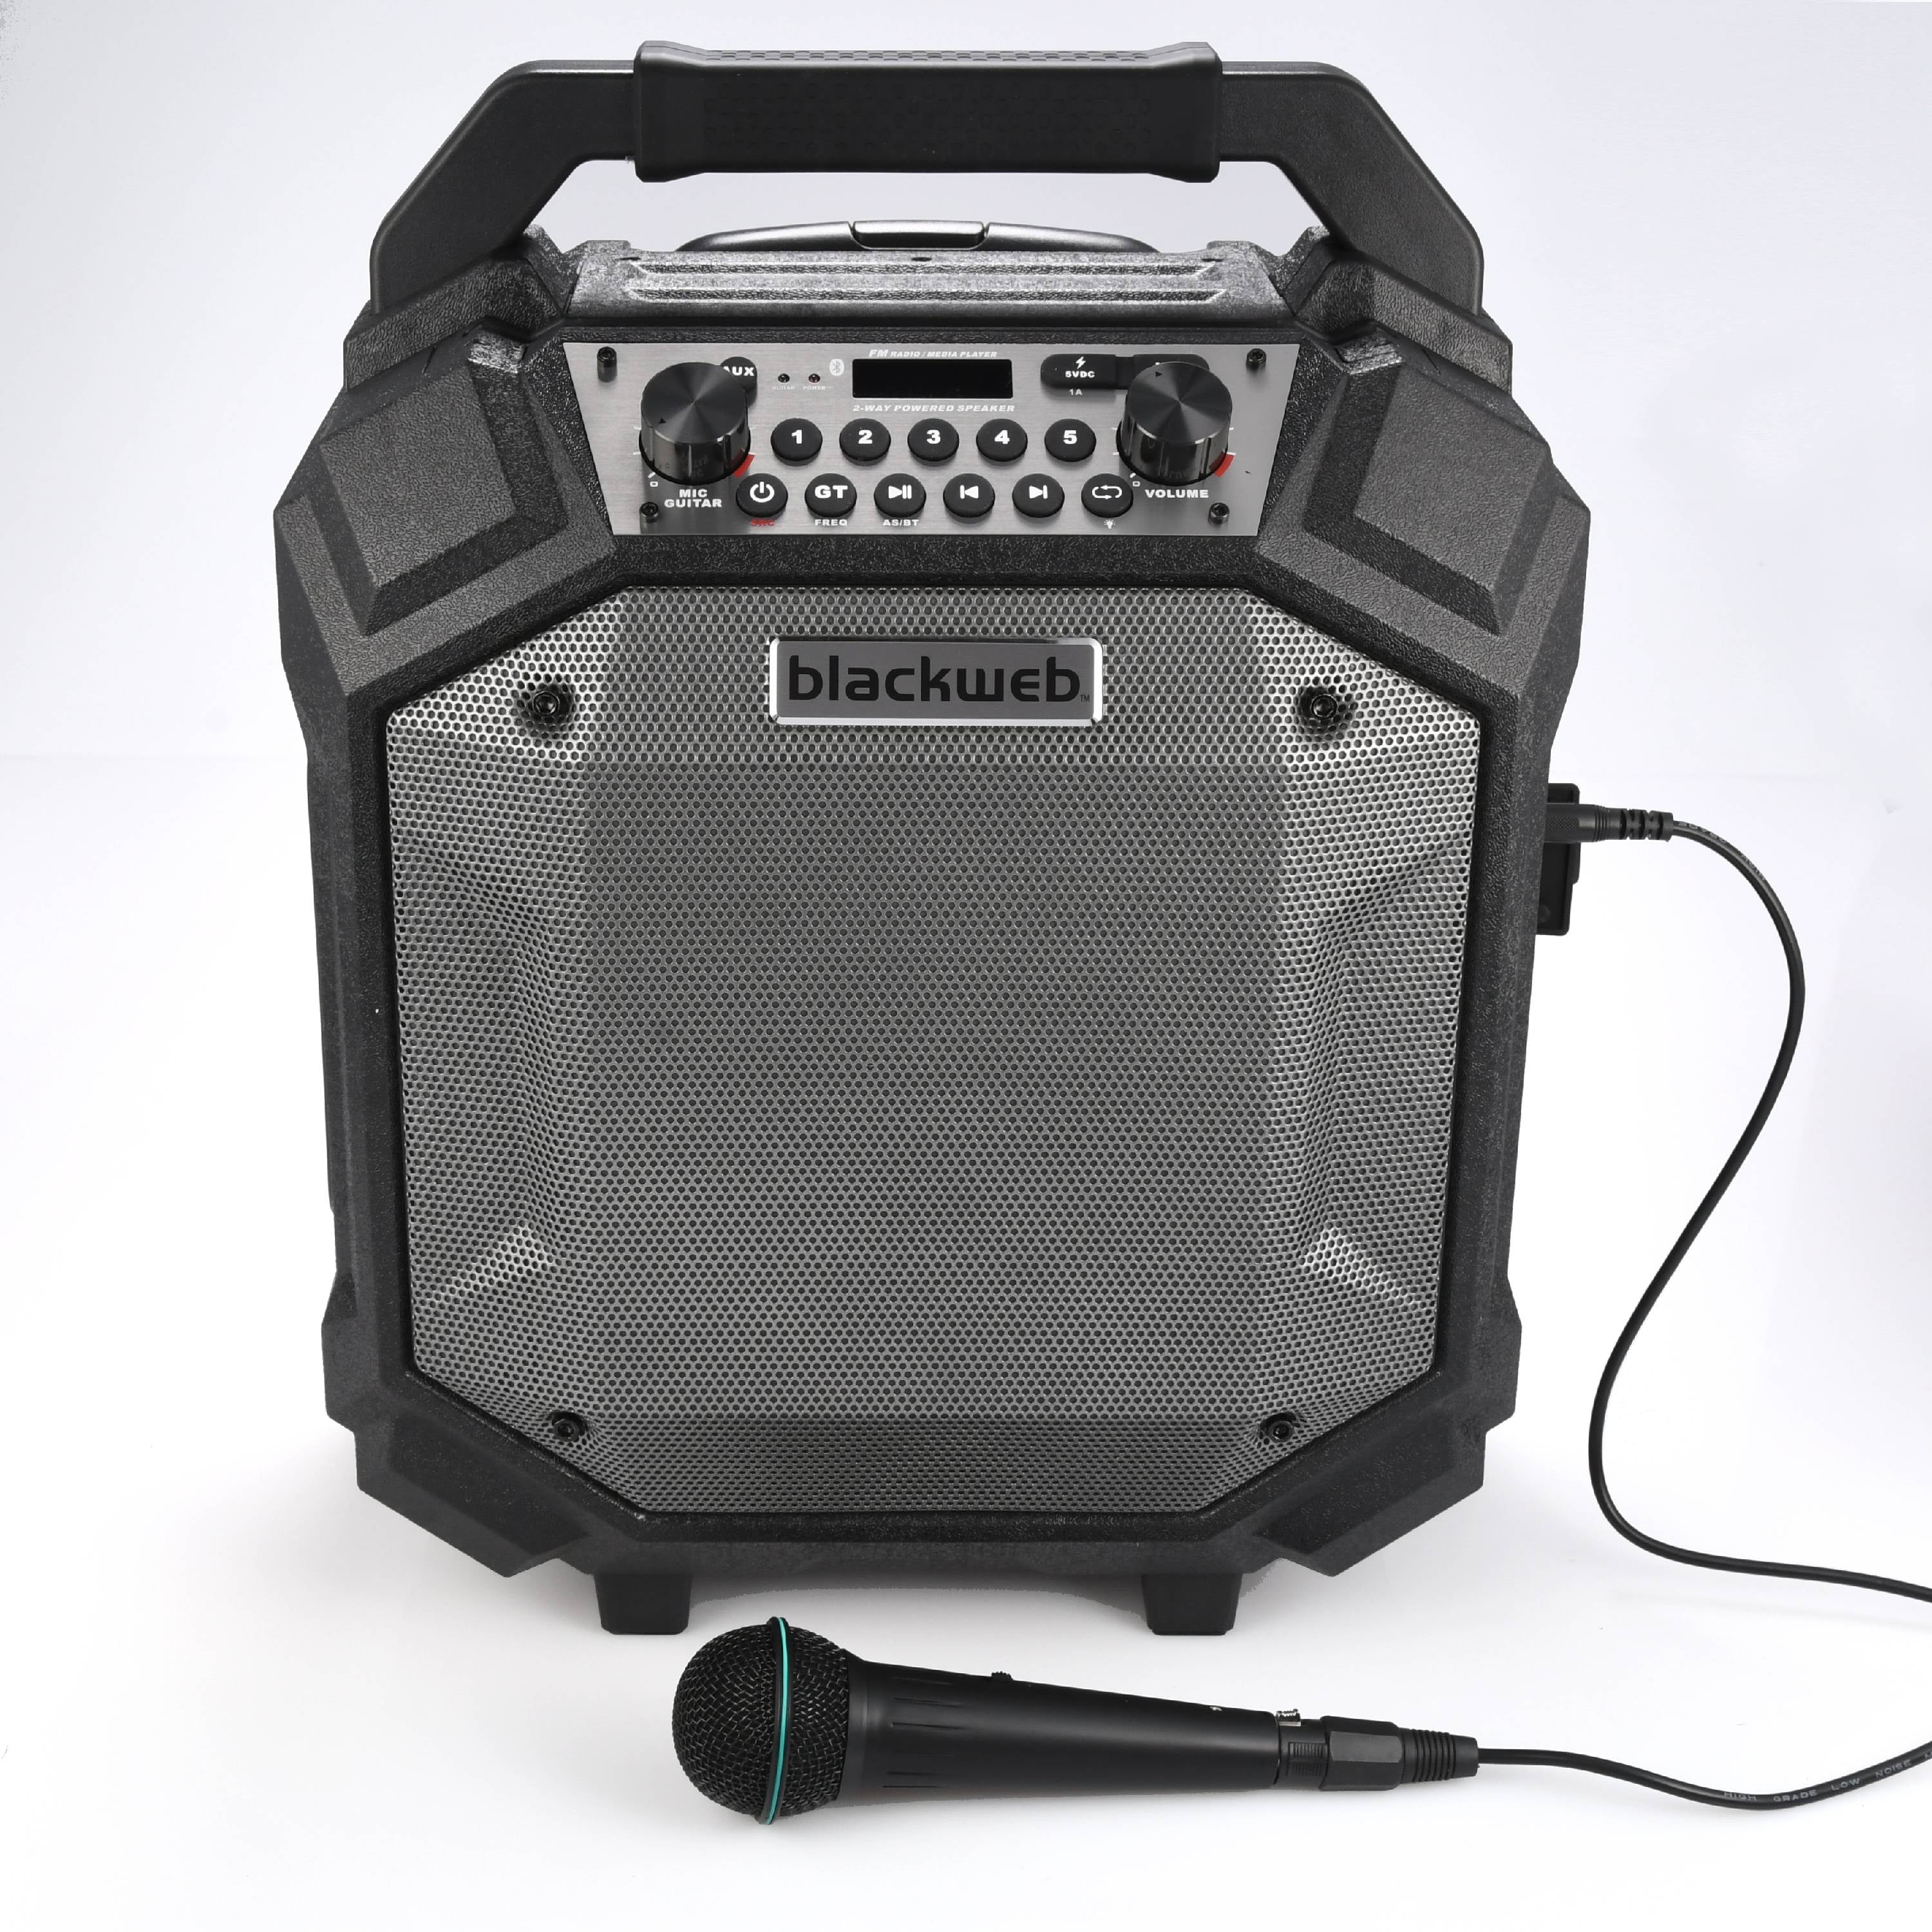 blackweb bluetooth speaker wmhxp571bkca